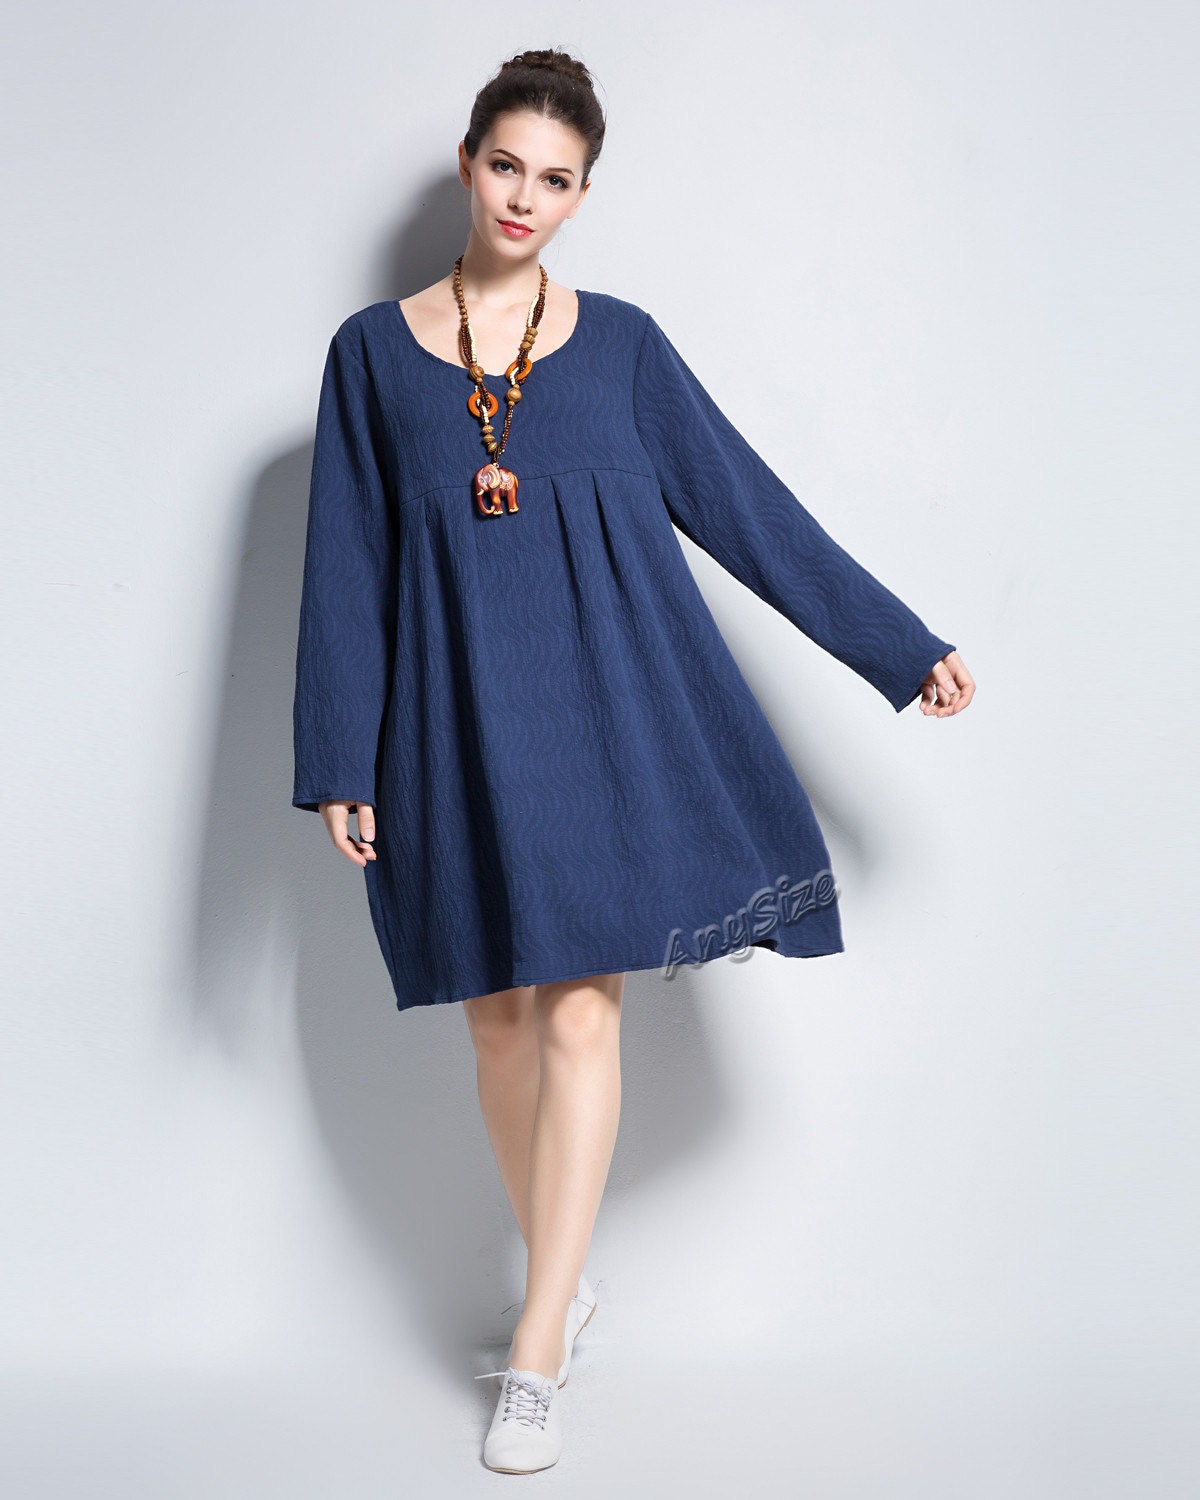 Anysize ripple jacquard soft cotton dress plus size dress plus | Etsy